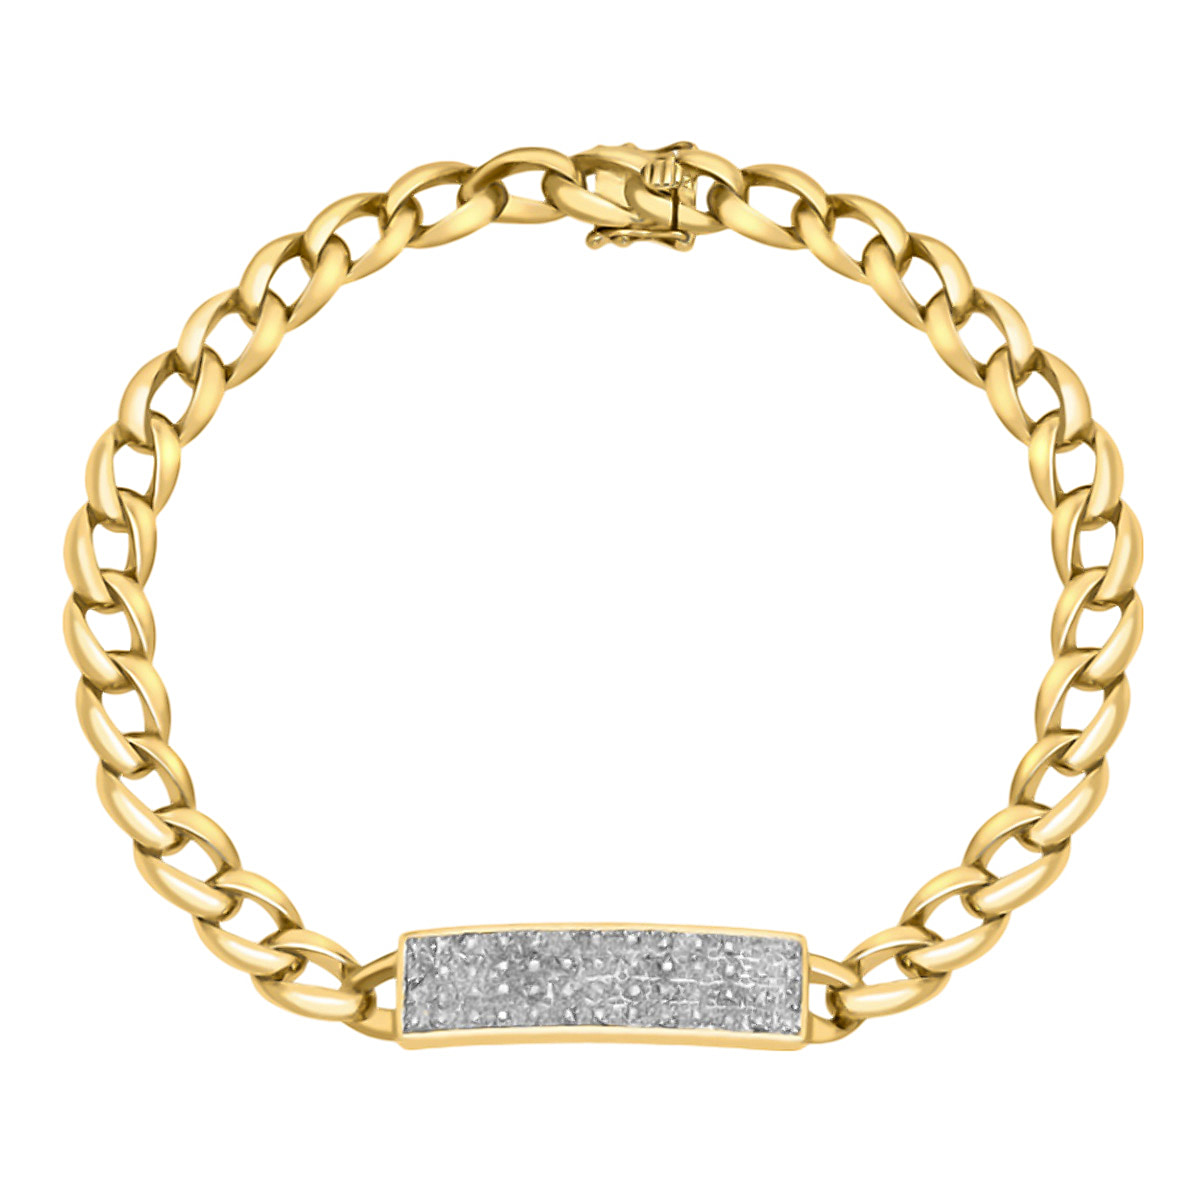 Designer Inspired 9K Yellow Gold  Diamond Curb Bracelet (Size - 9), Gold Wt 22.00 GM